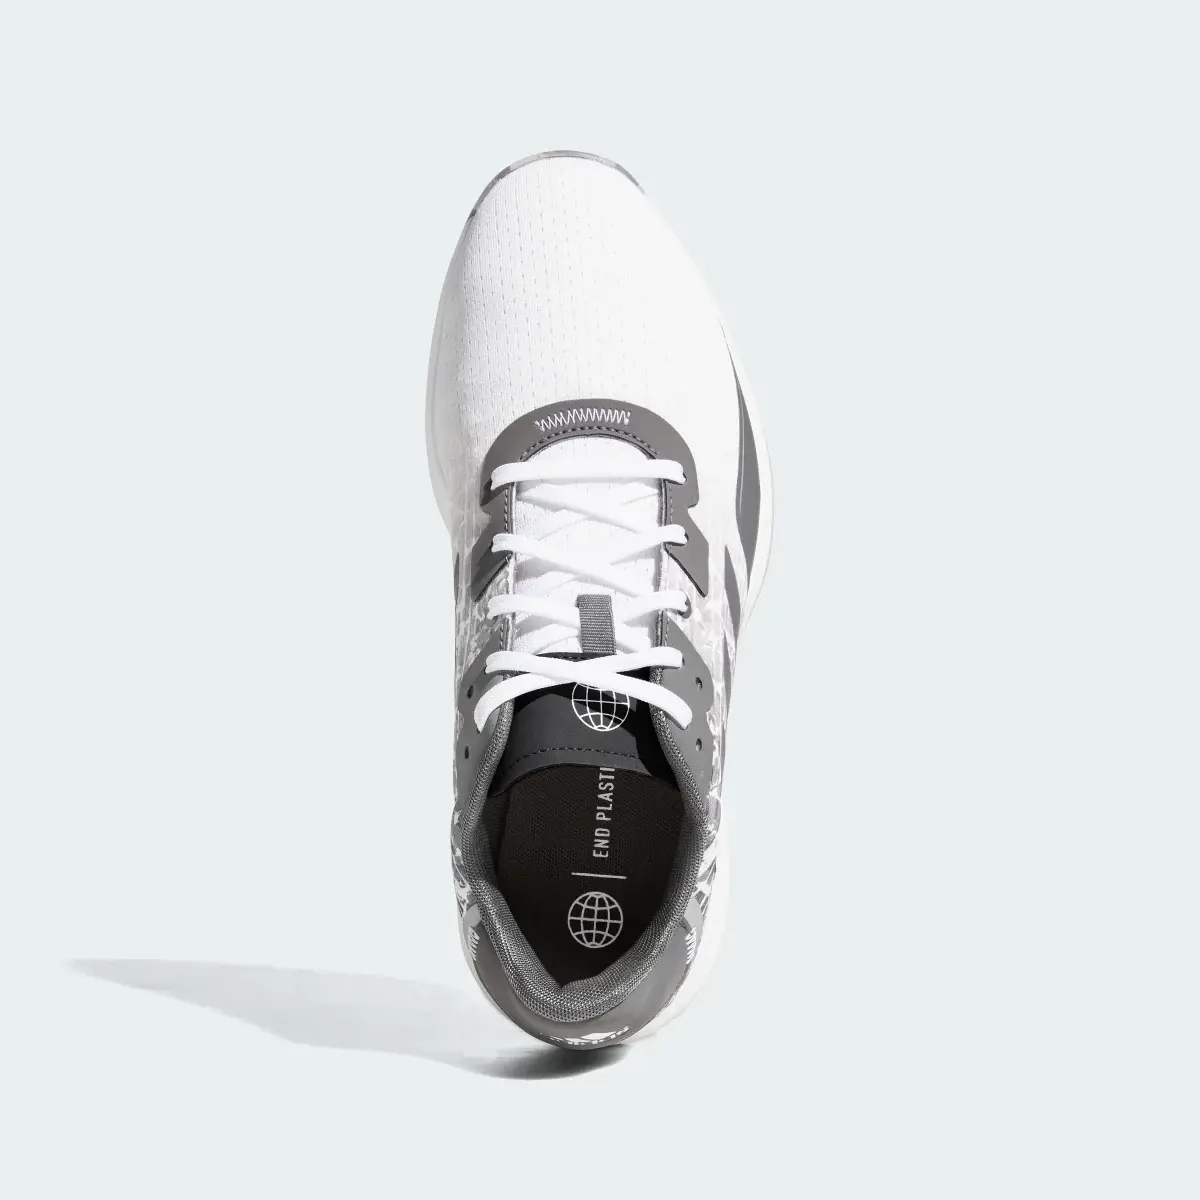 Adidas S2G Wide Spikeless Golf Shoes. 3